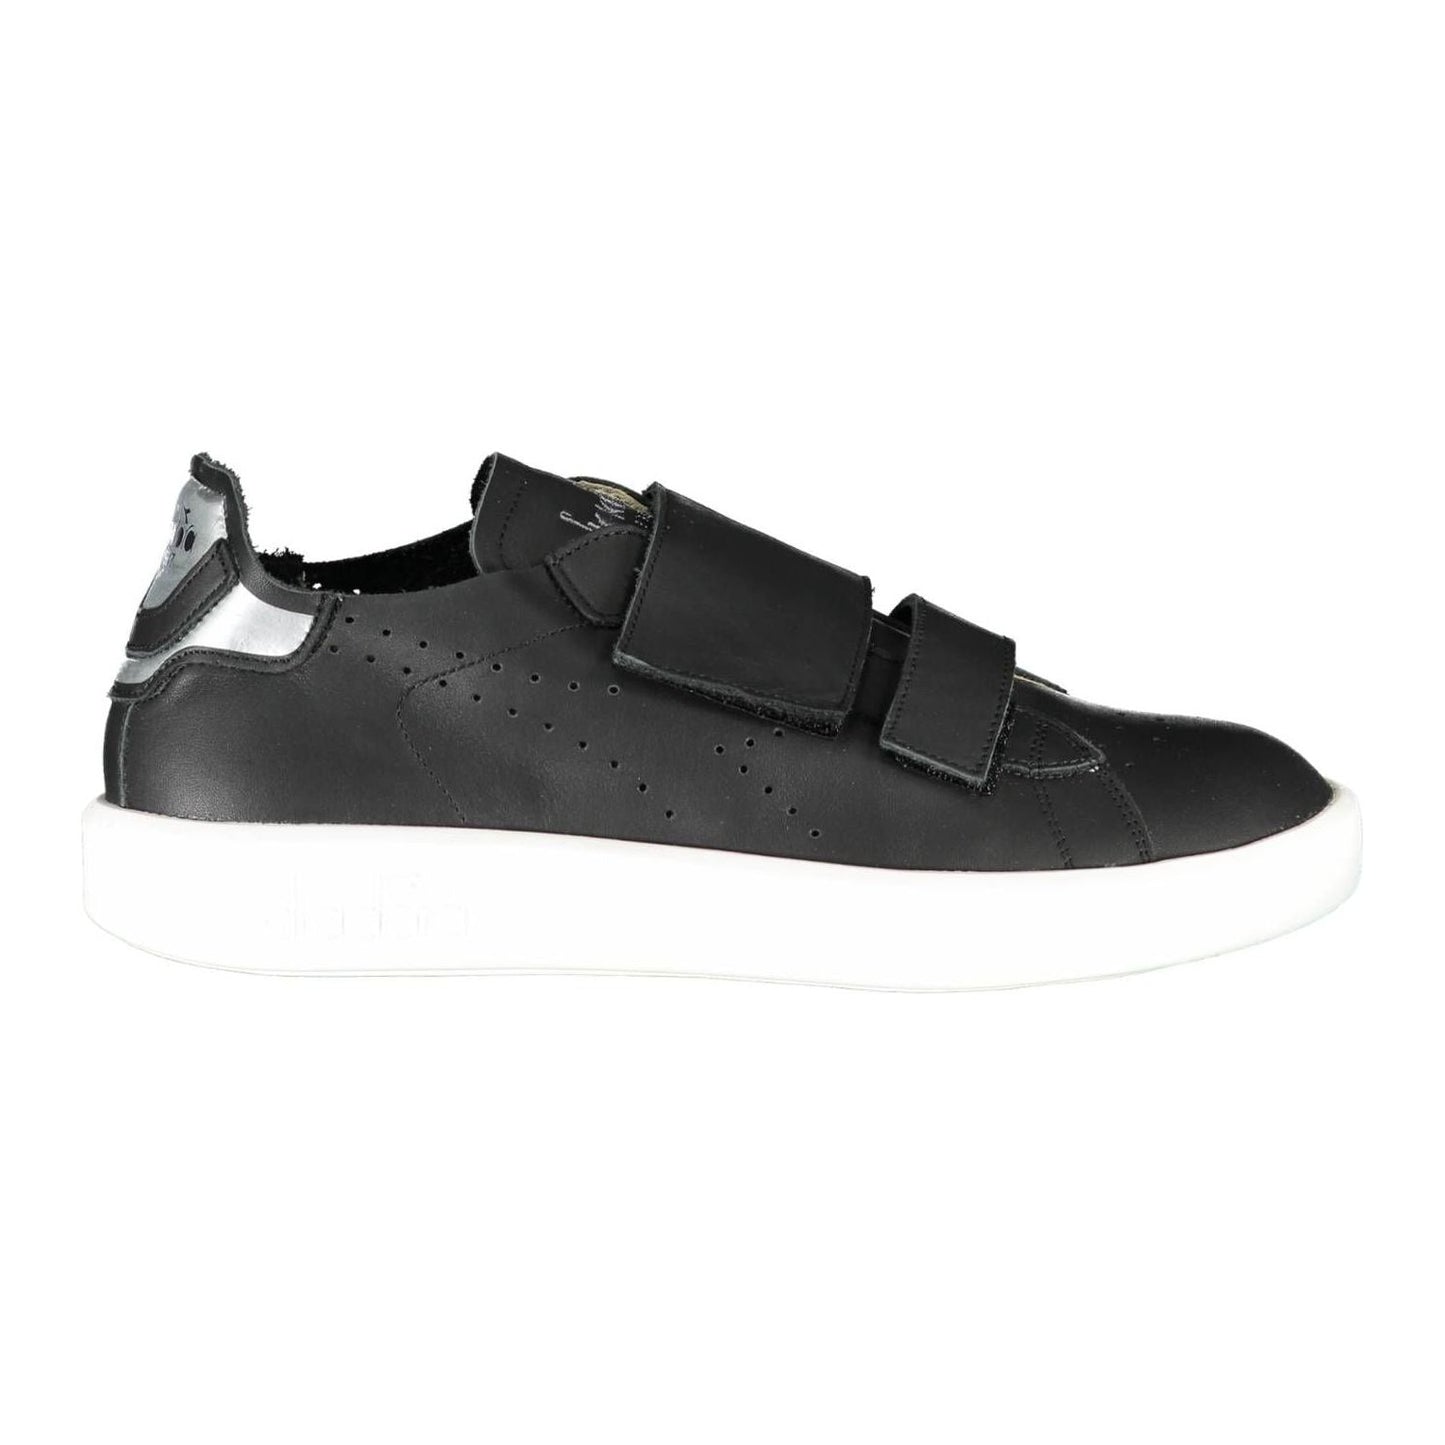 DiadoraSleek Black Leather Sneakers with Contrast DetailsMcRichard Designer Brands£119.00